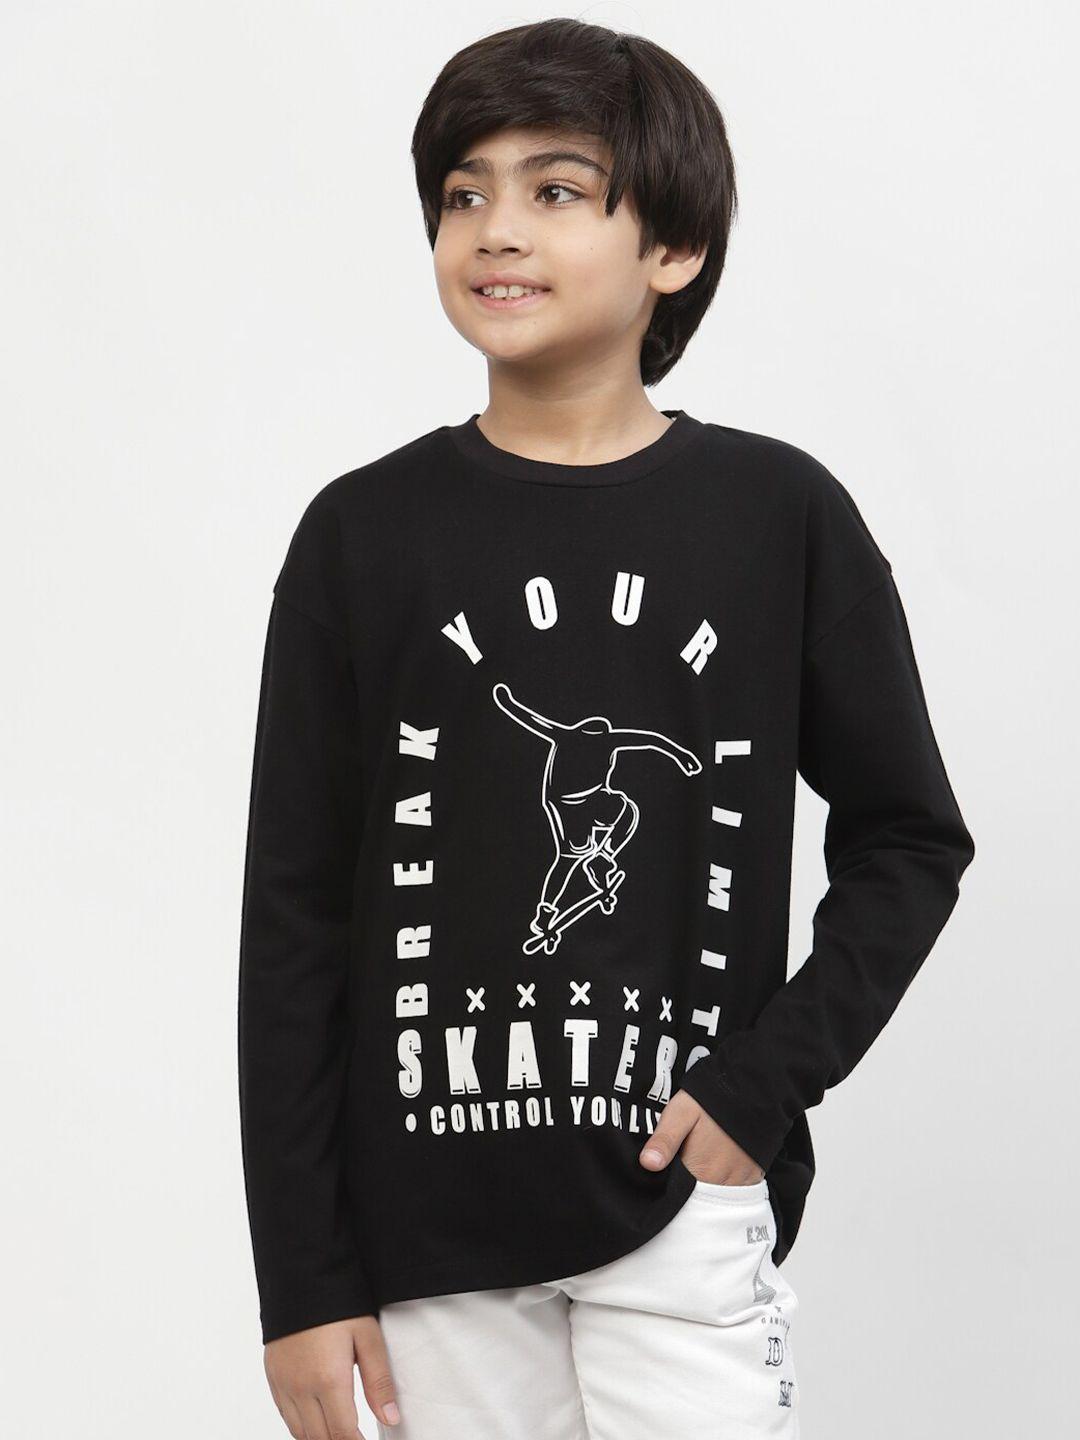 spunkies-boys-black-typography-t-shirt